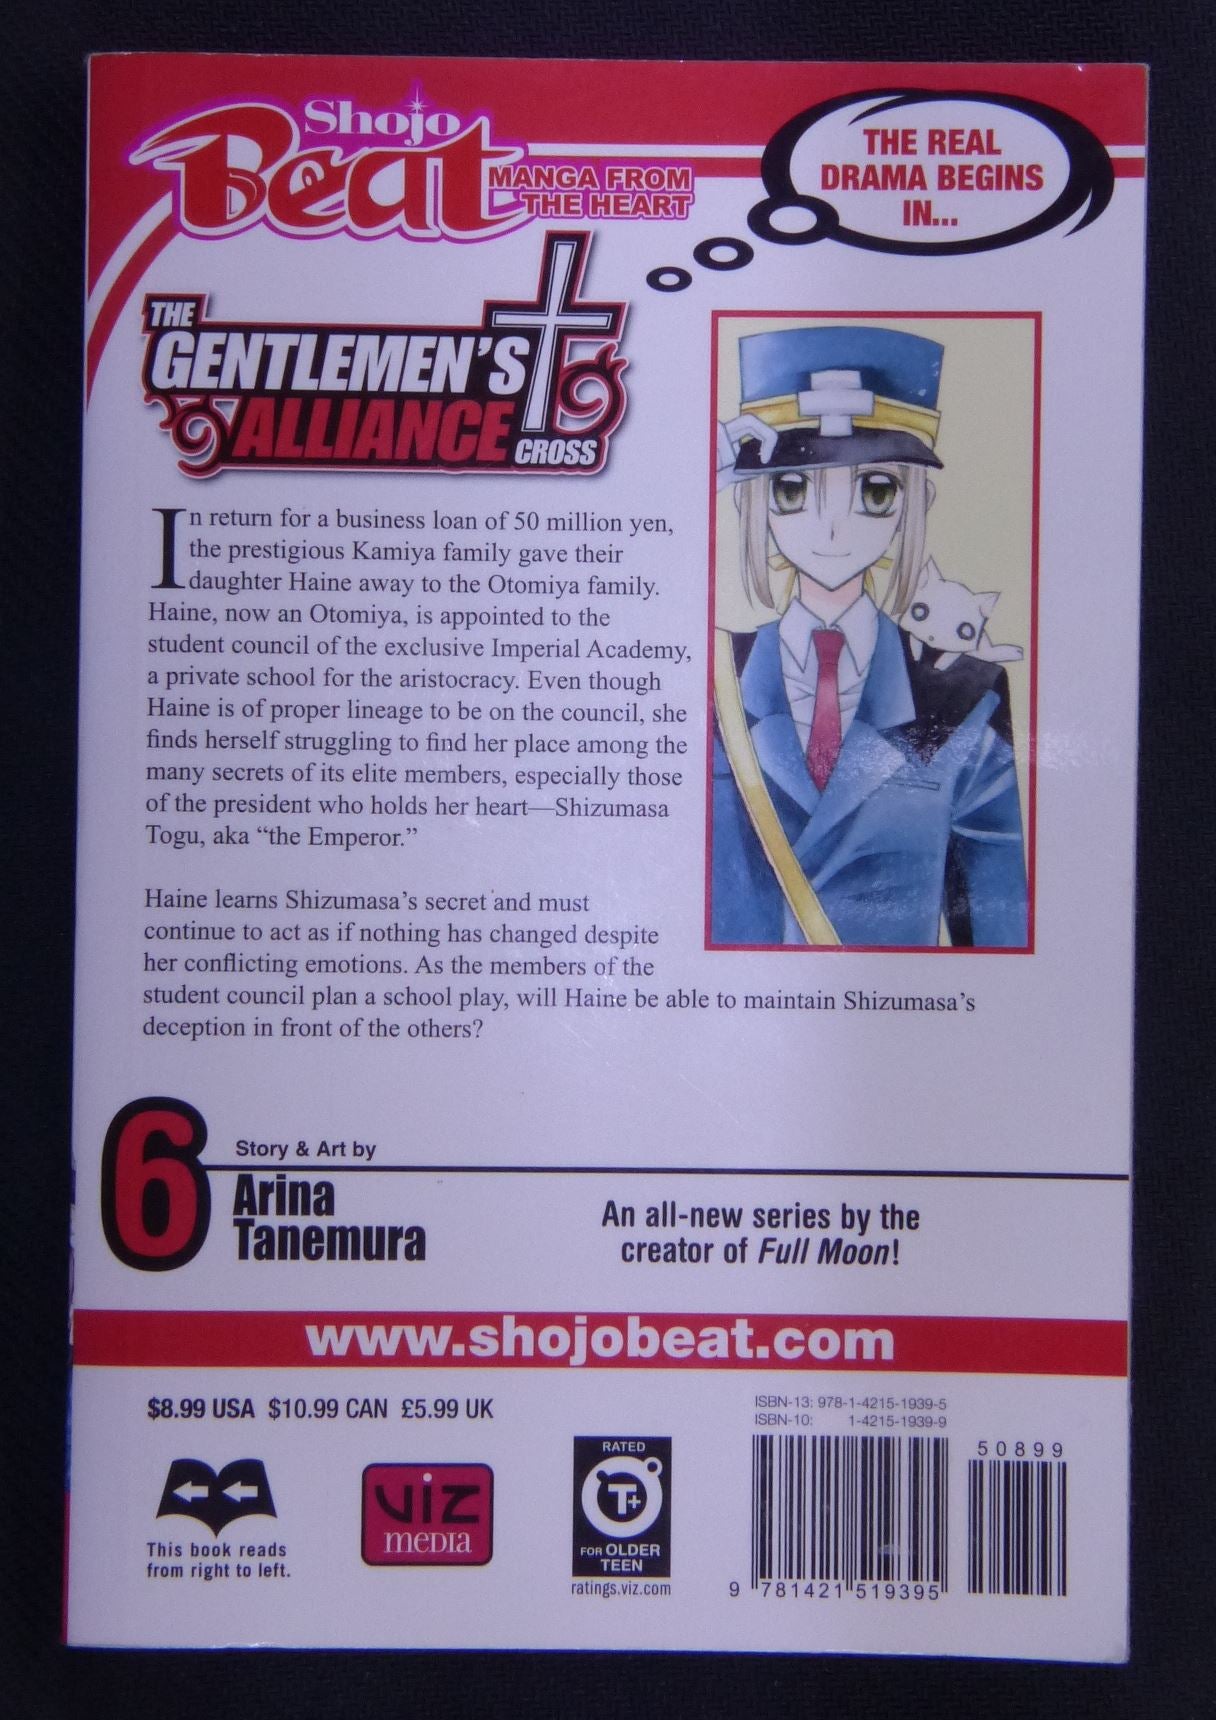 USED - The Gentlemans Alliance Cross - Volume 6 - Manga #I